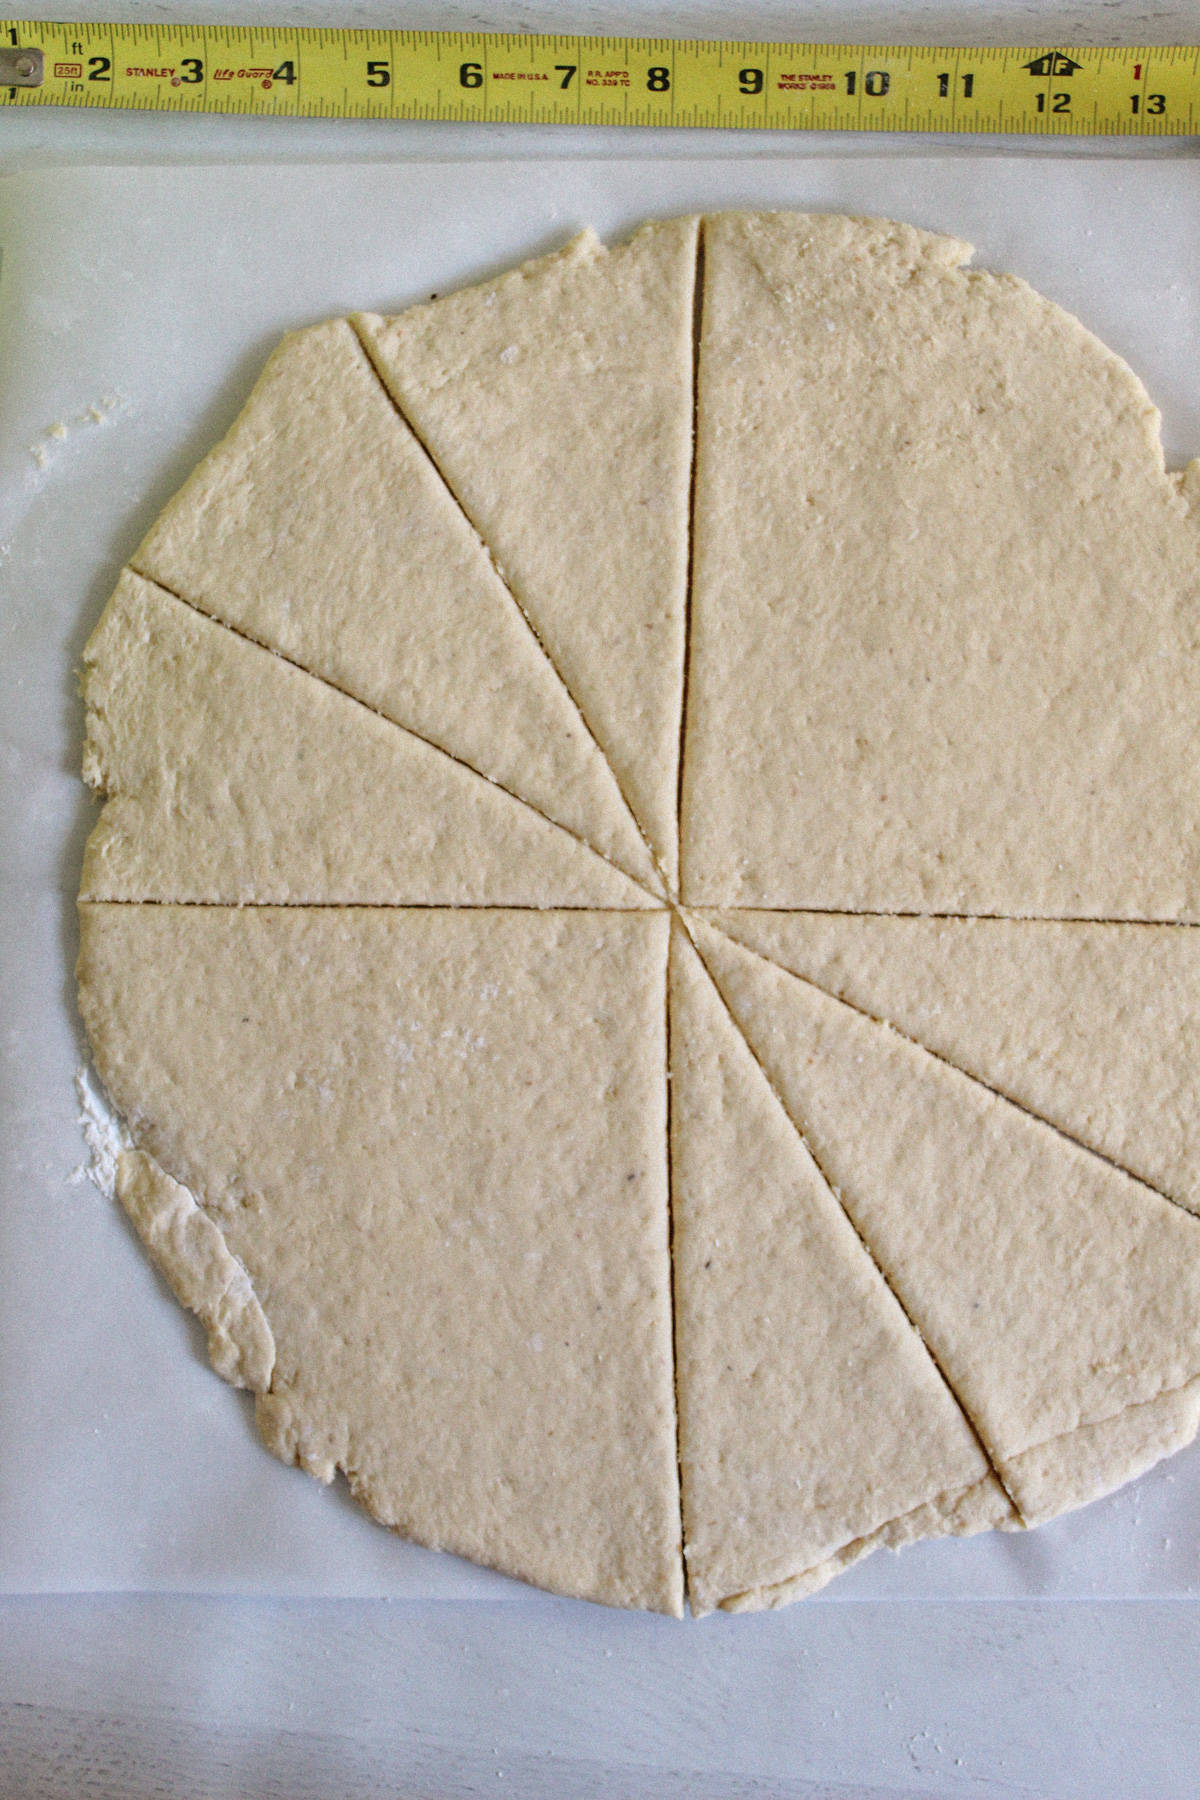 crescent dough cut into sections